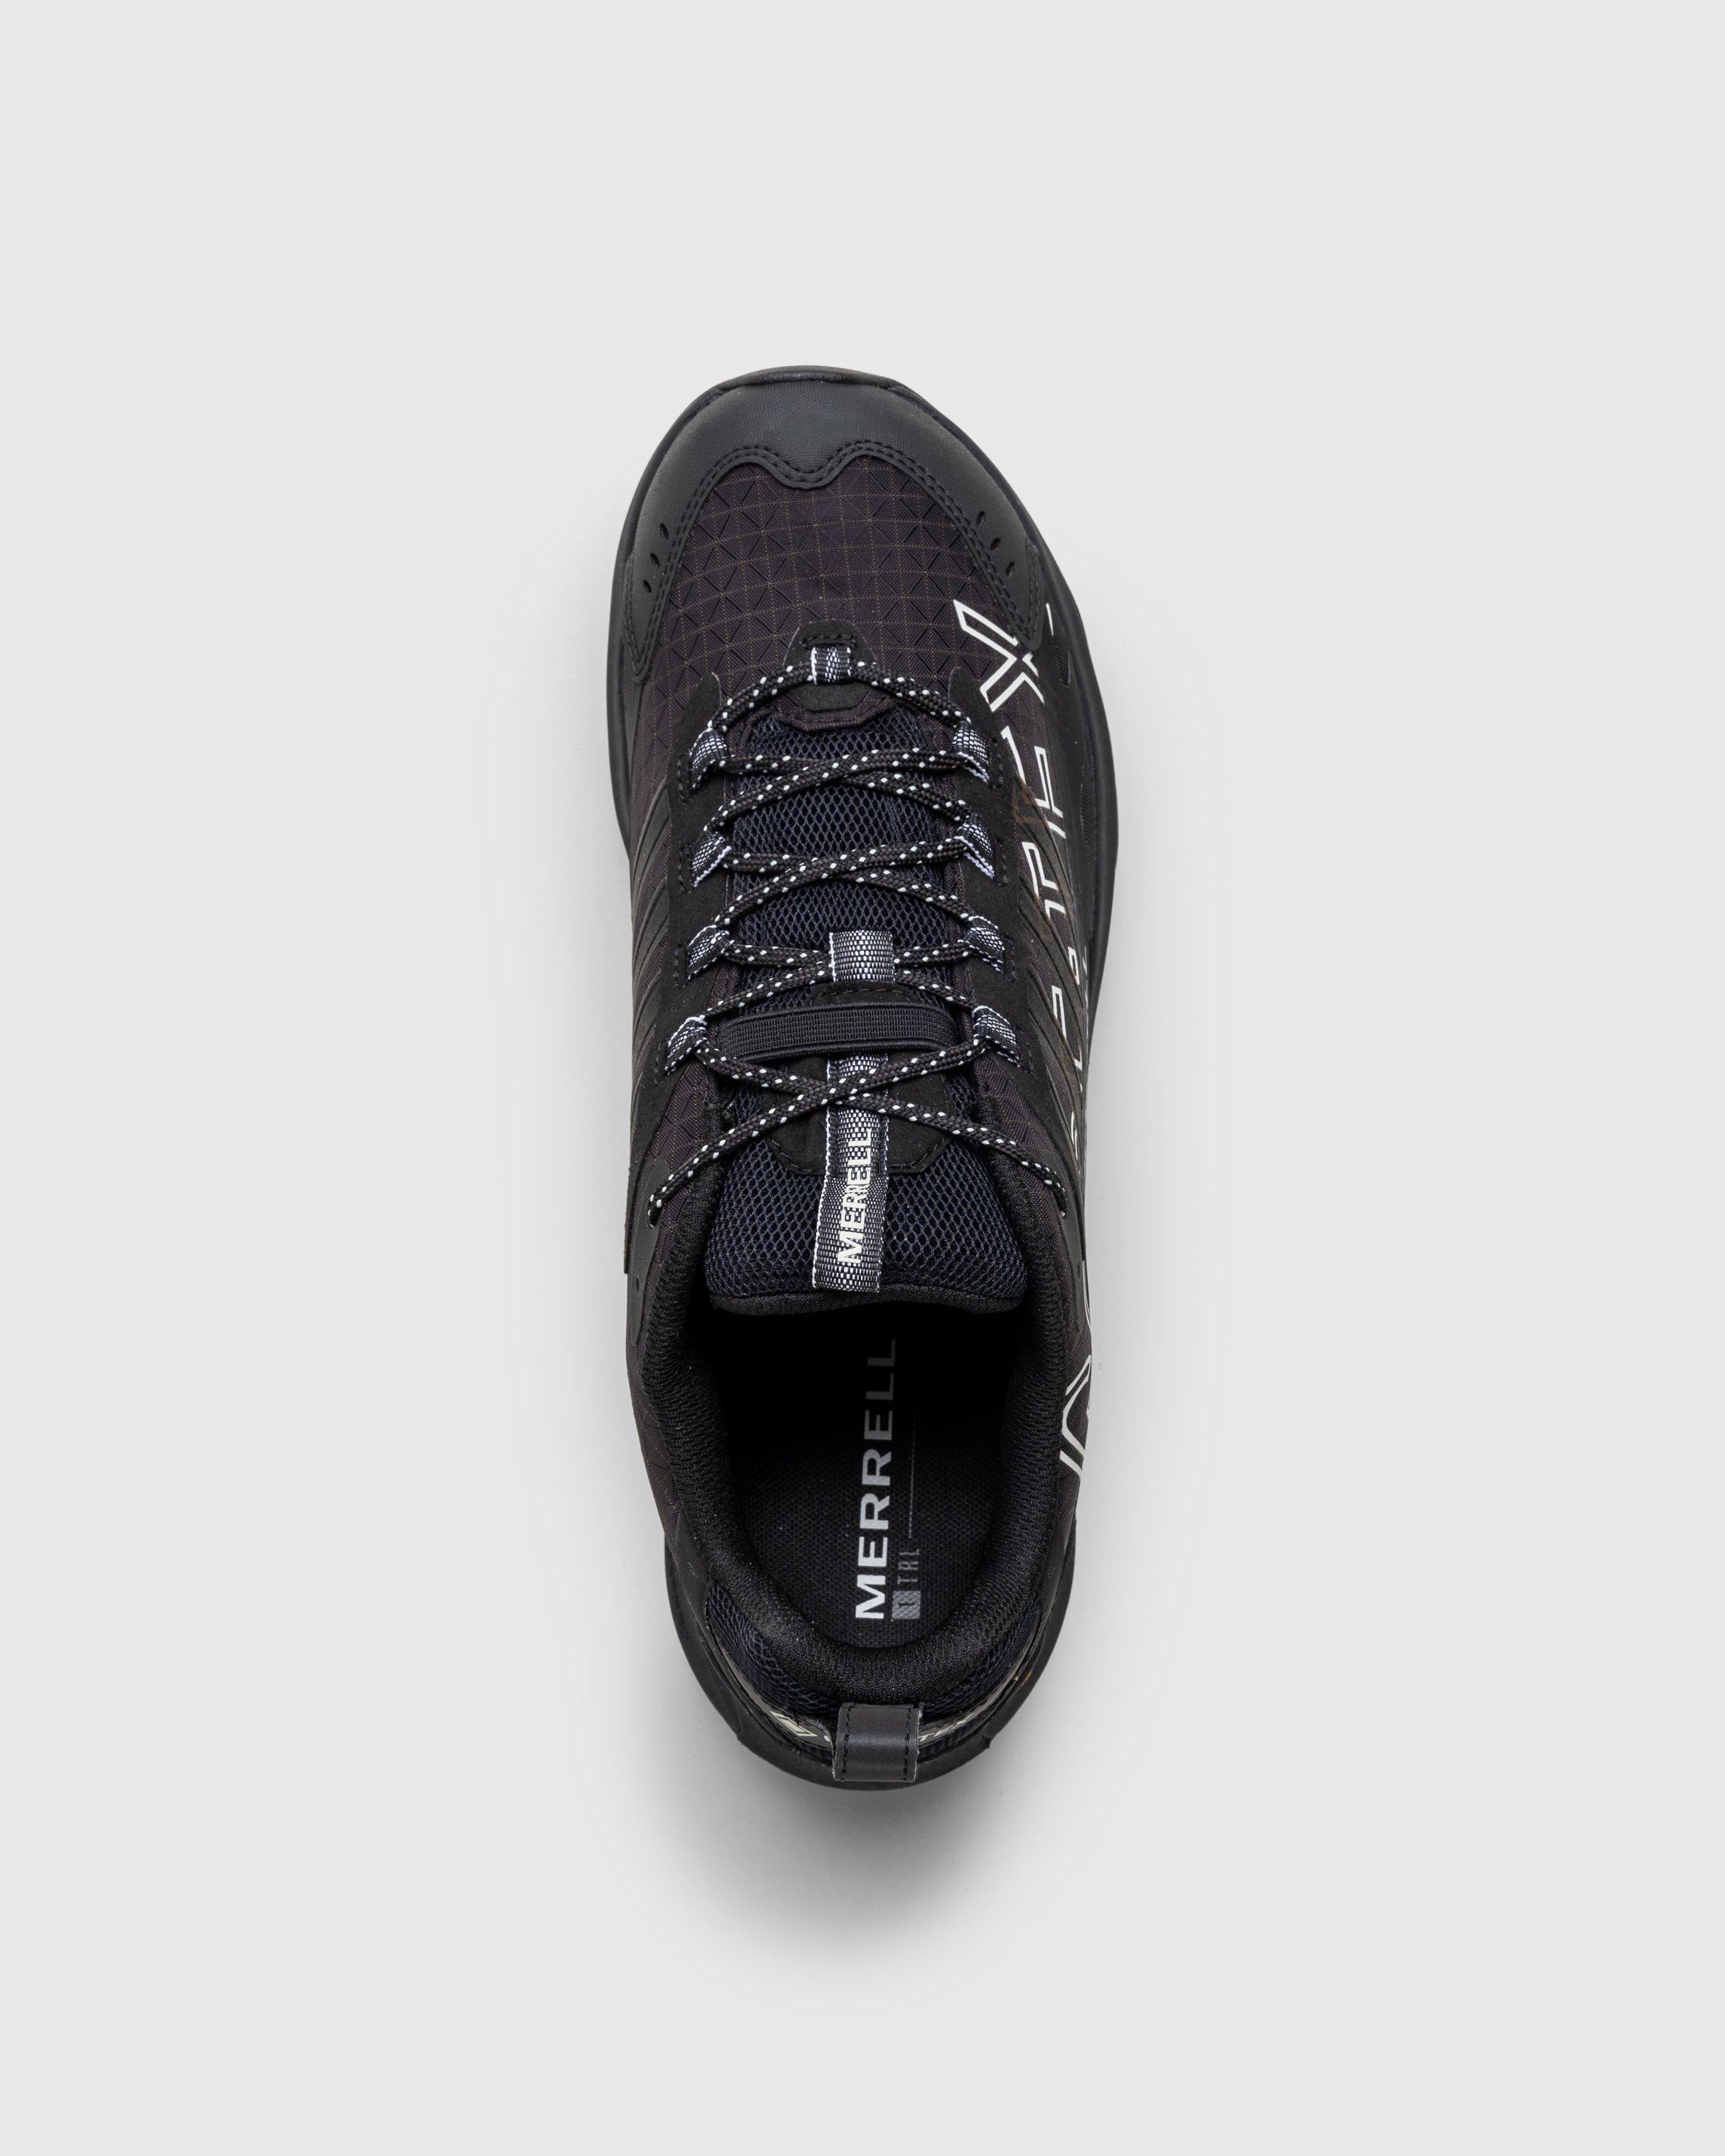 Merrell - MOAB SPEED 2 GTX BL SE/BLACK - Footwear - Black - Image 5